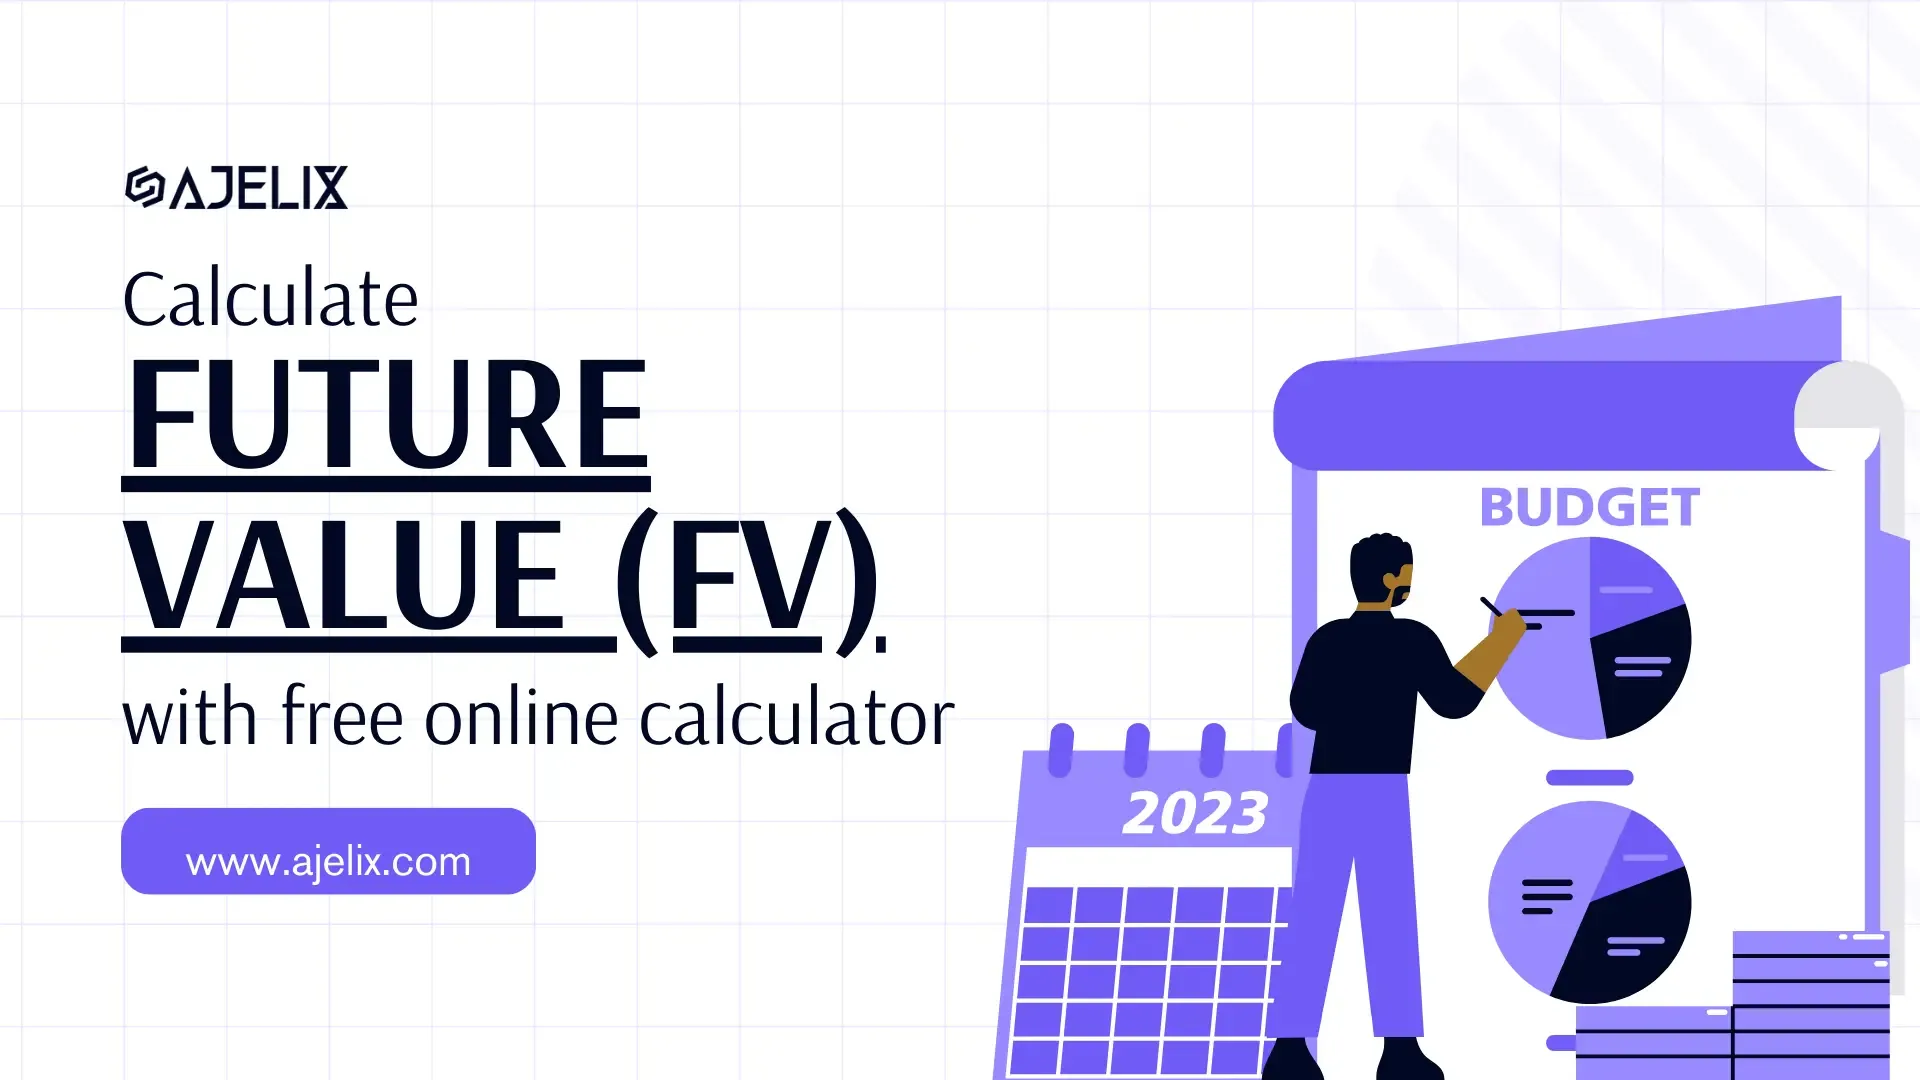 Free future value calculator online banner